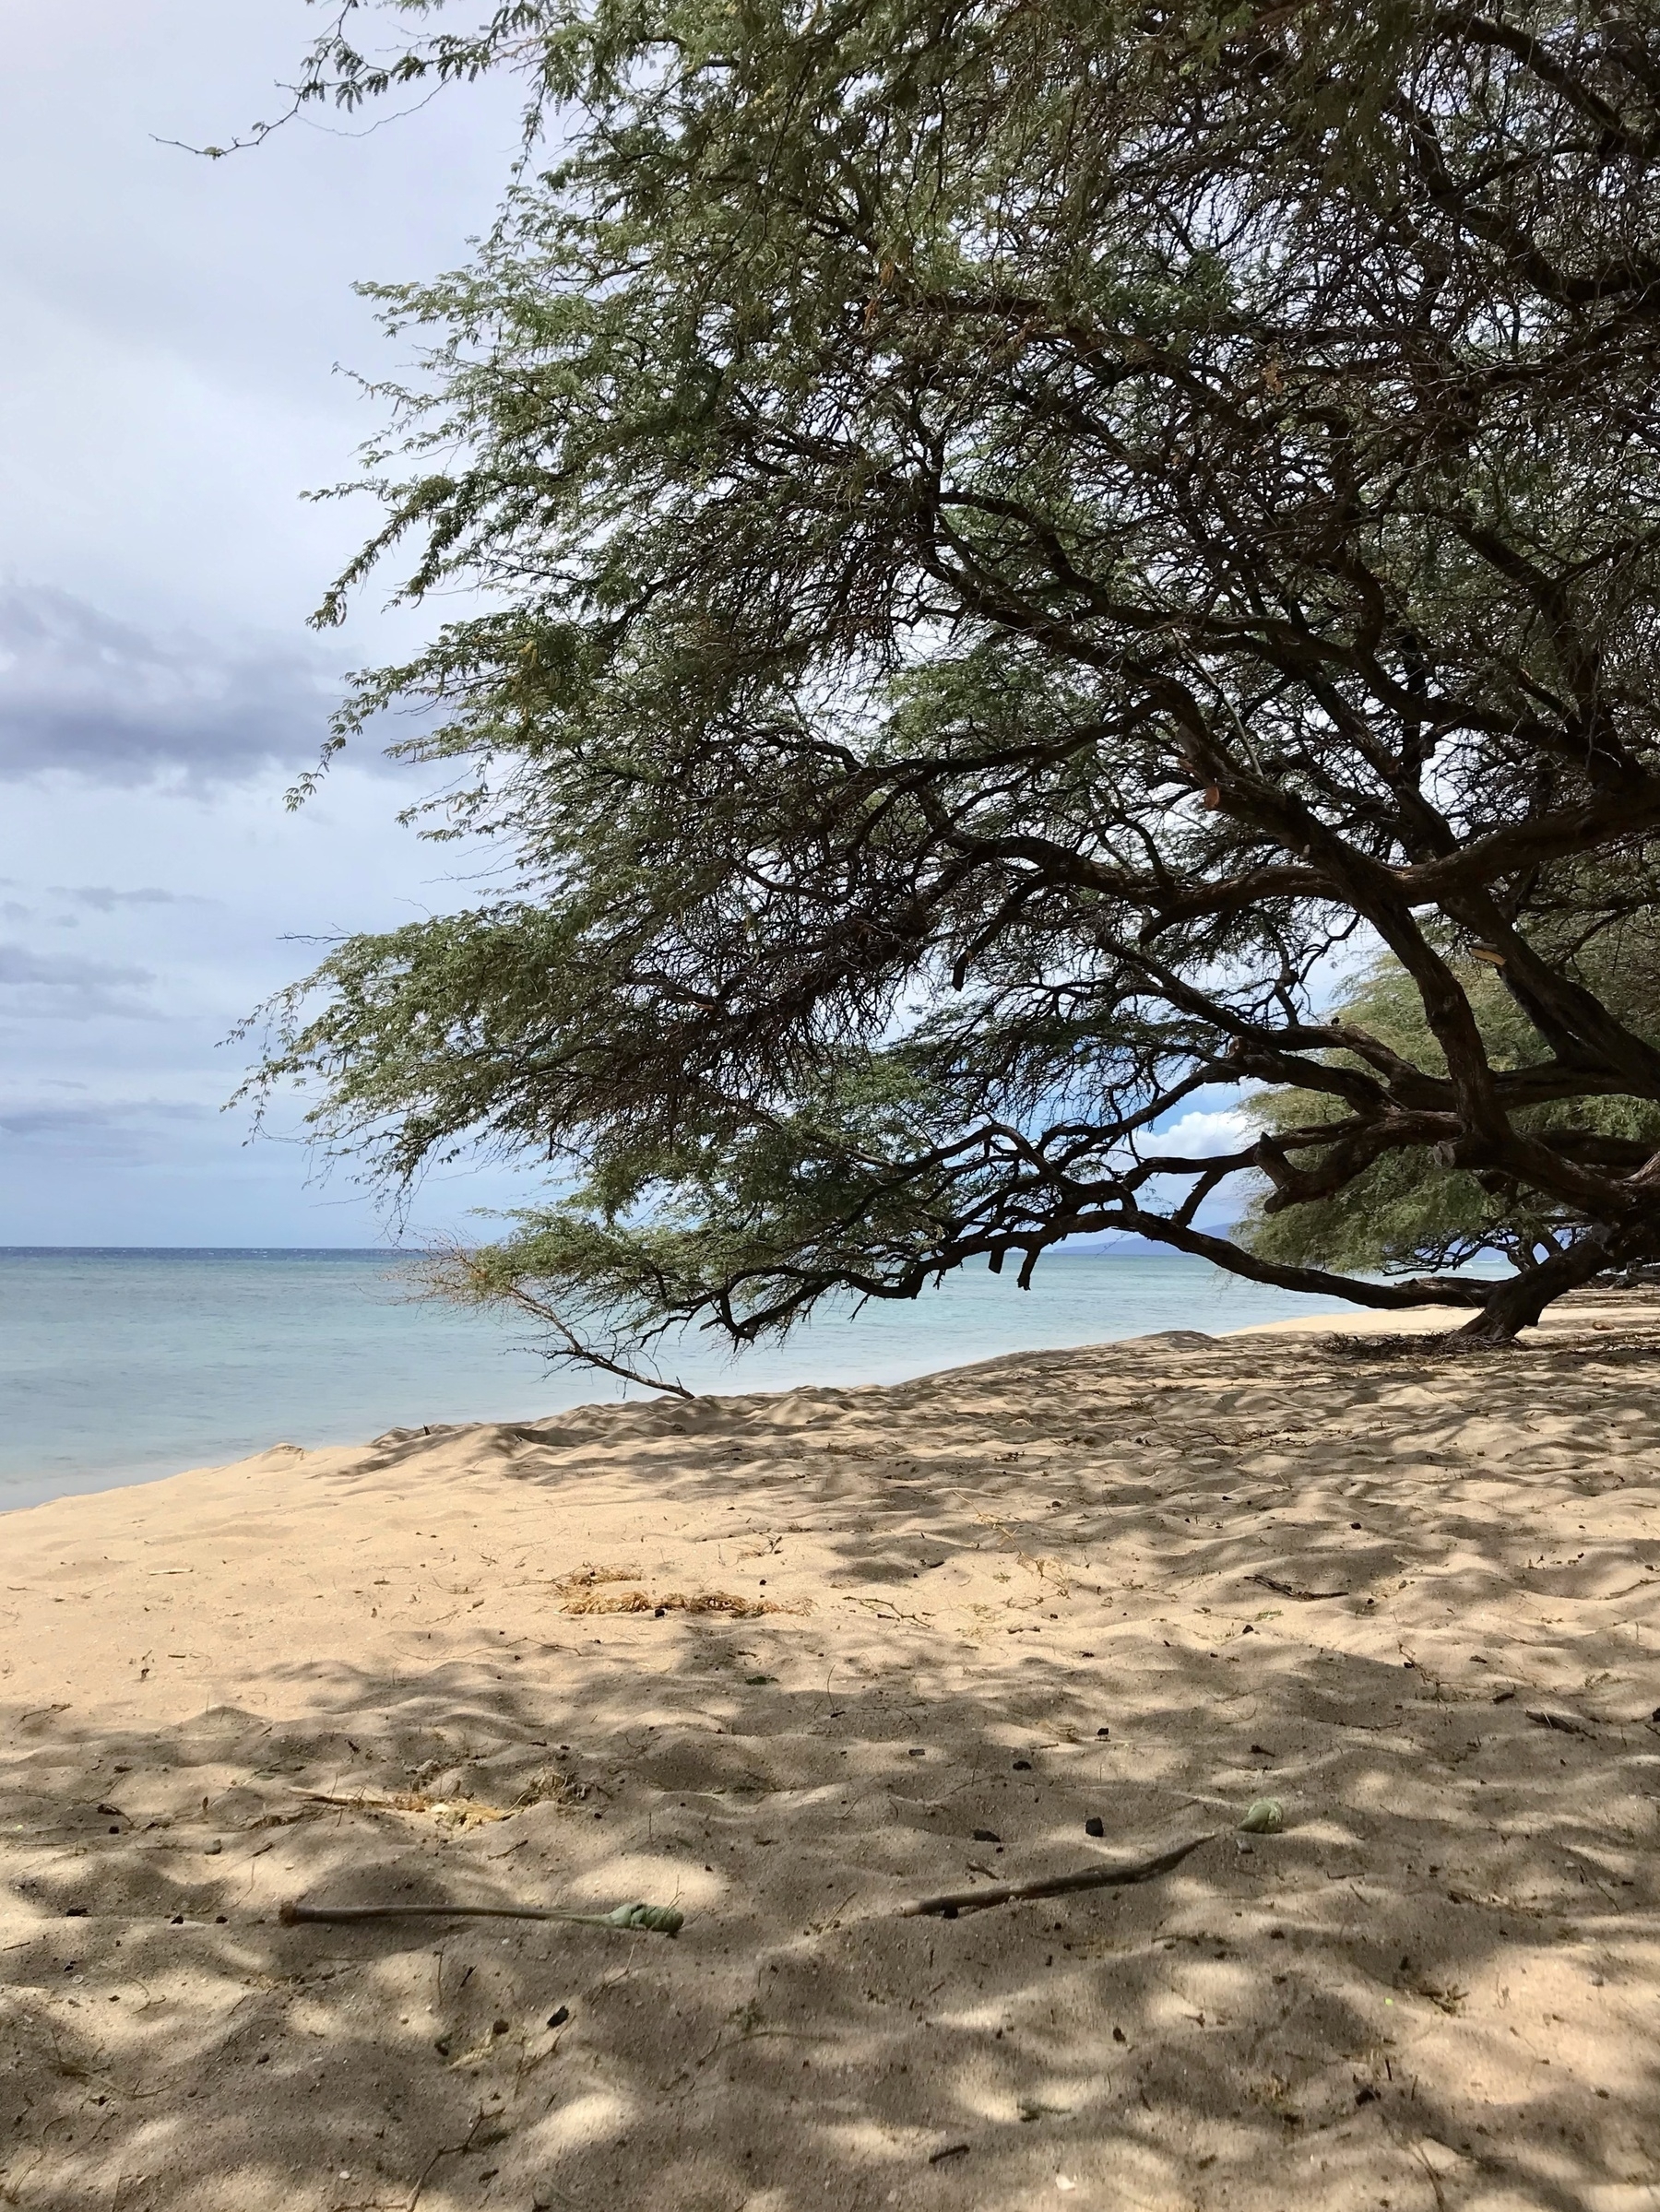 Kiawe tree on a beach in Maui